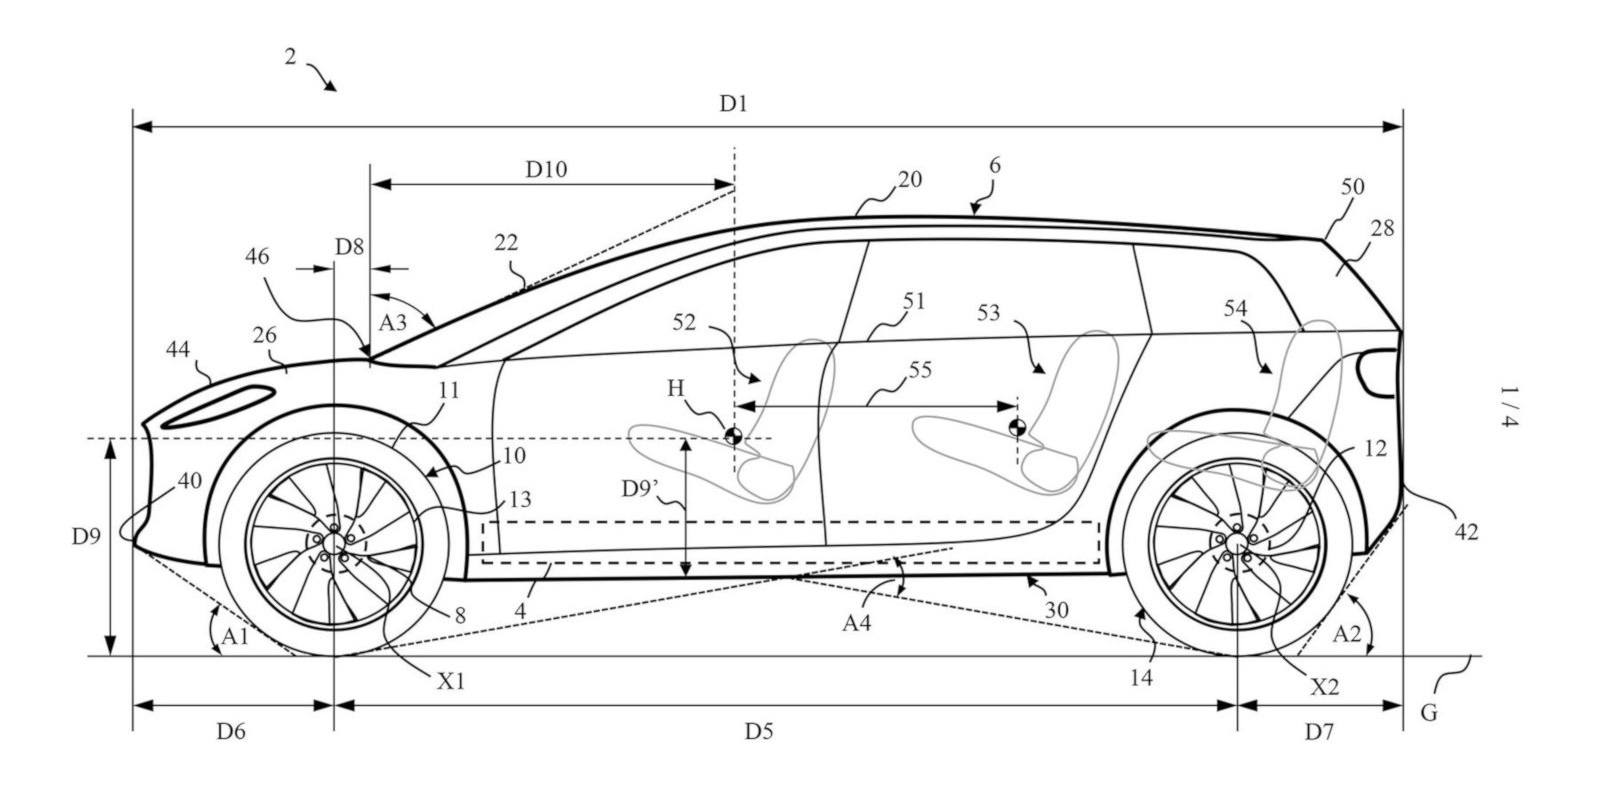 Dyson electric car patent